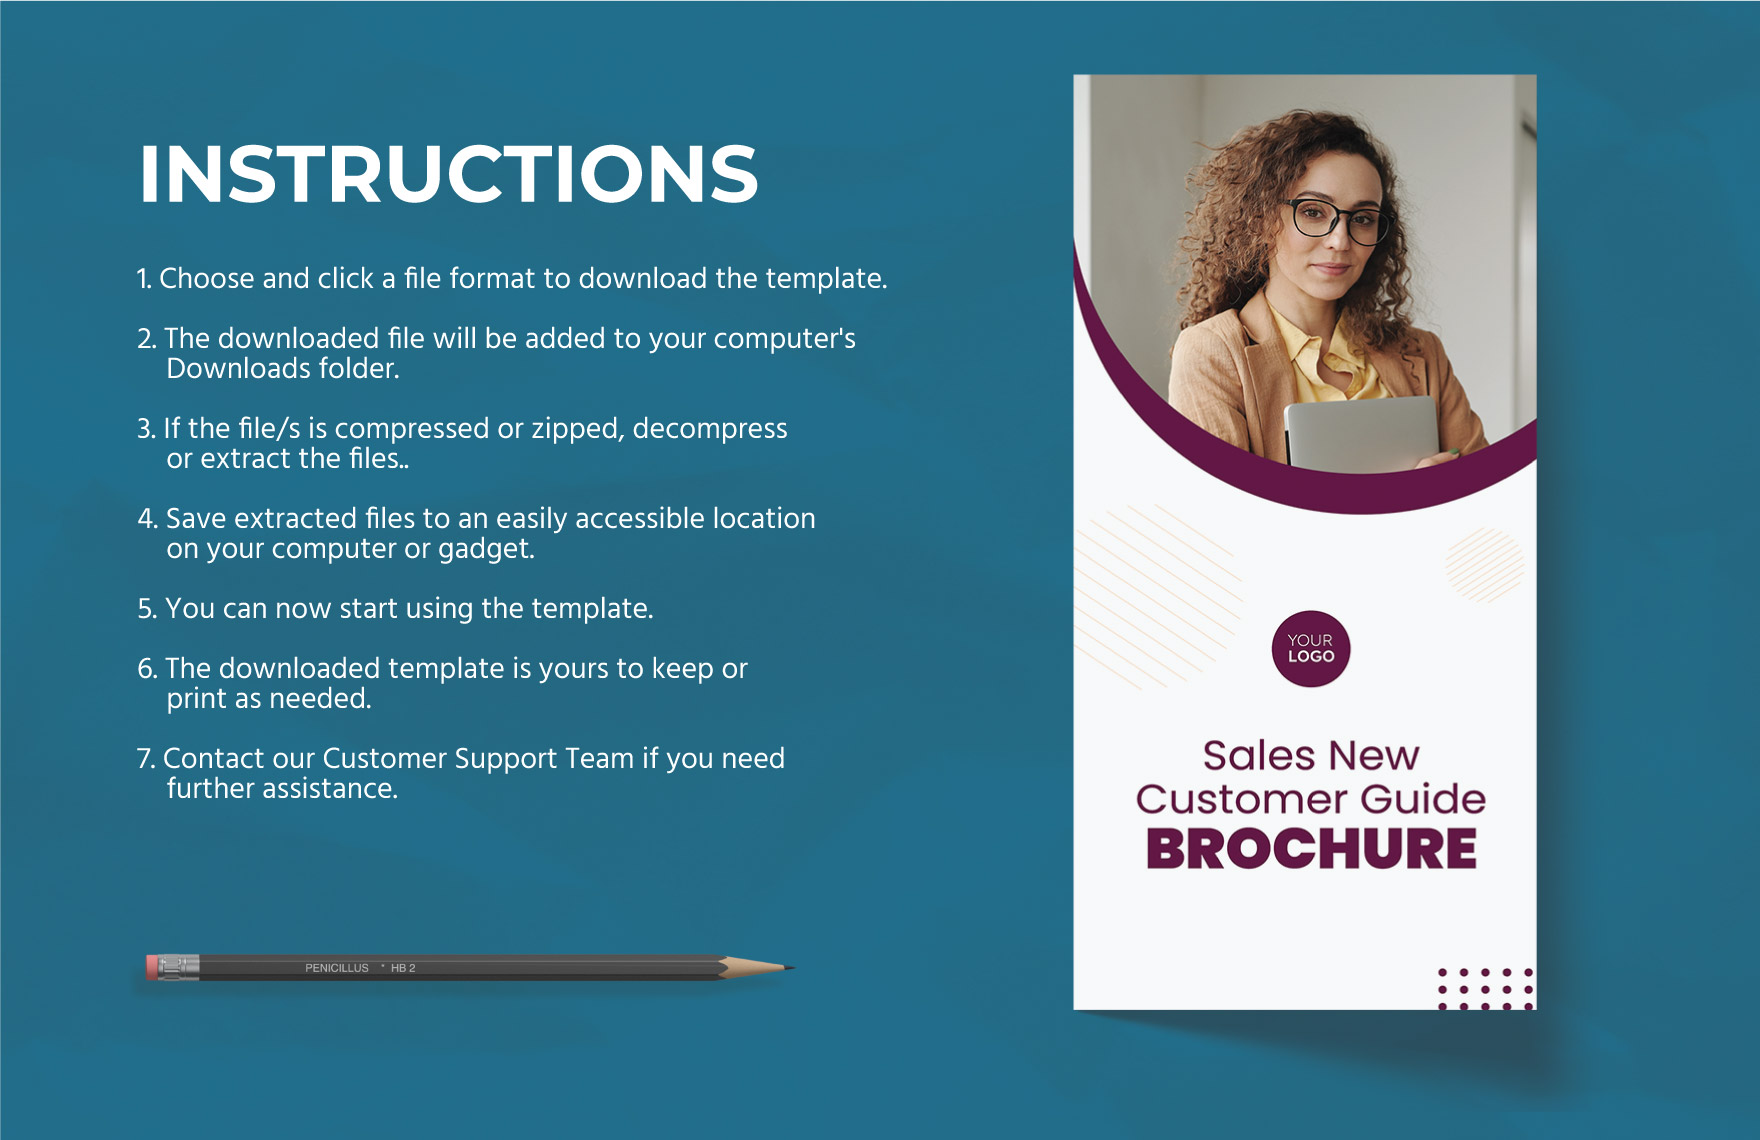 Sales New Customer Guide Brochure Template